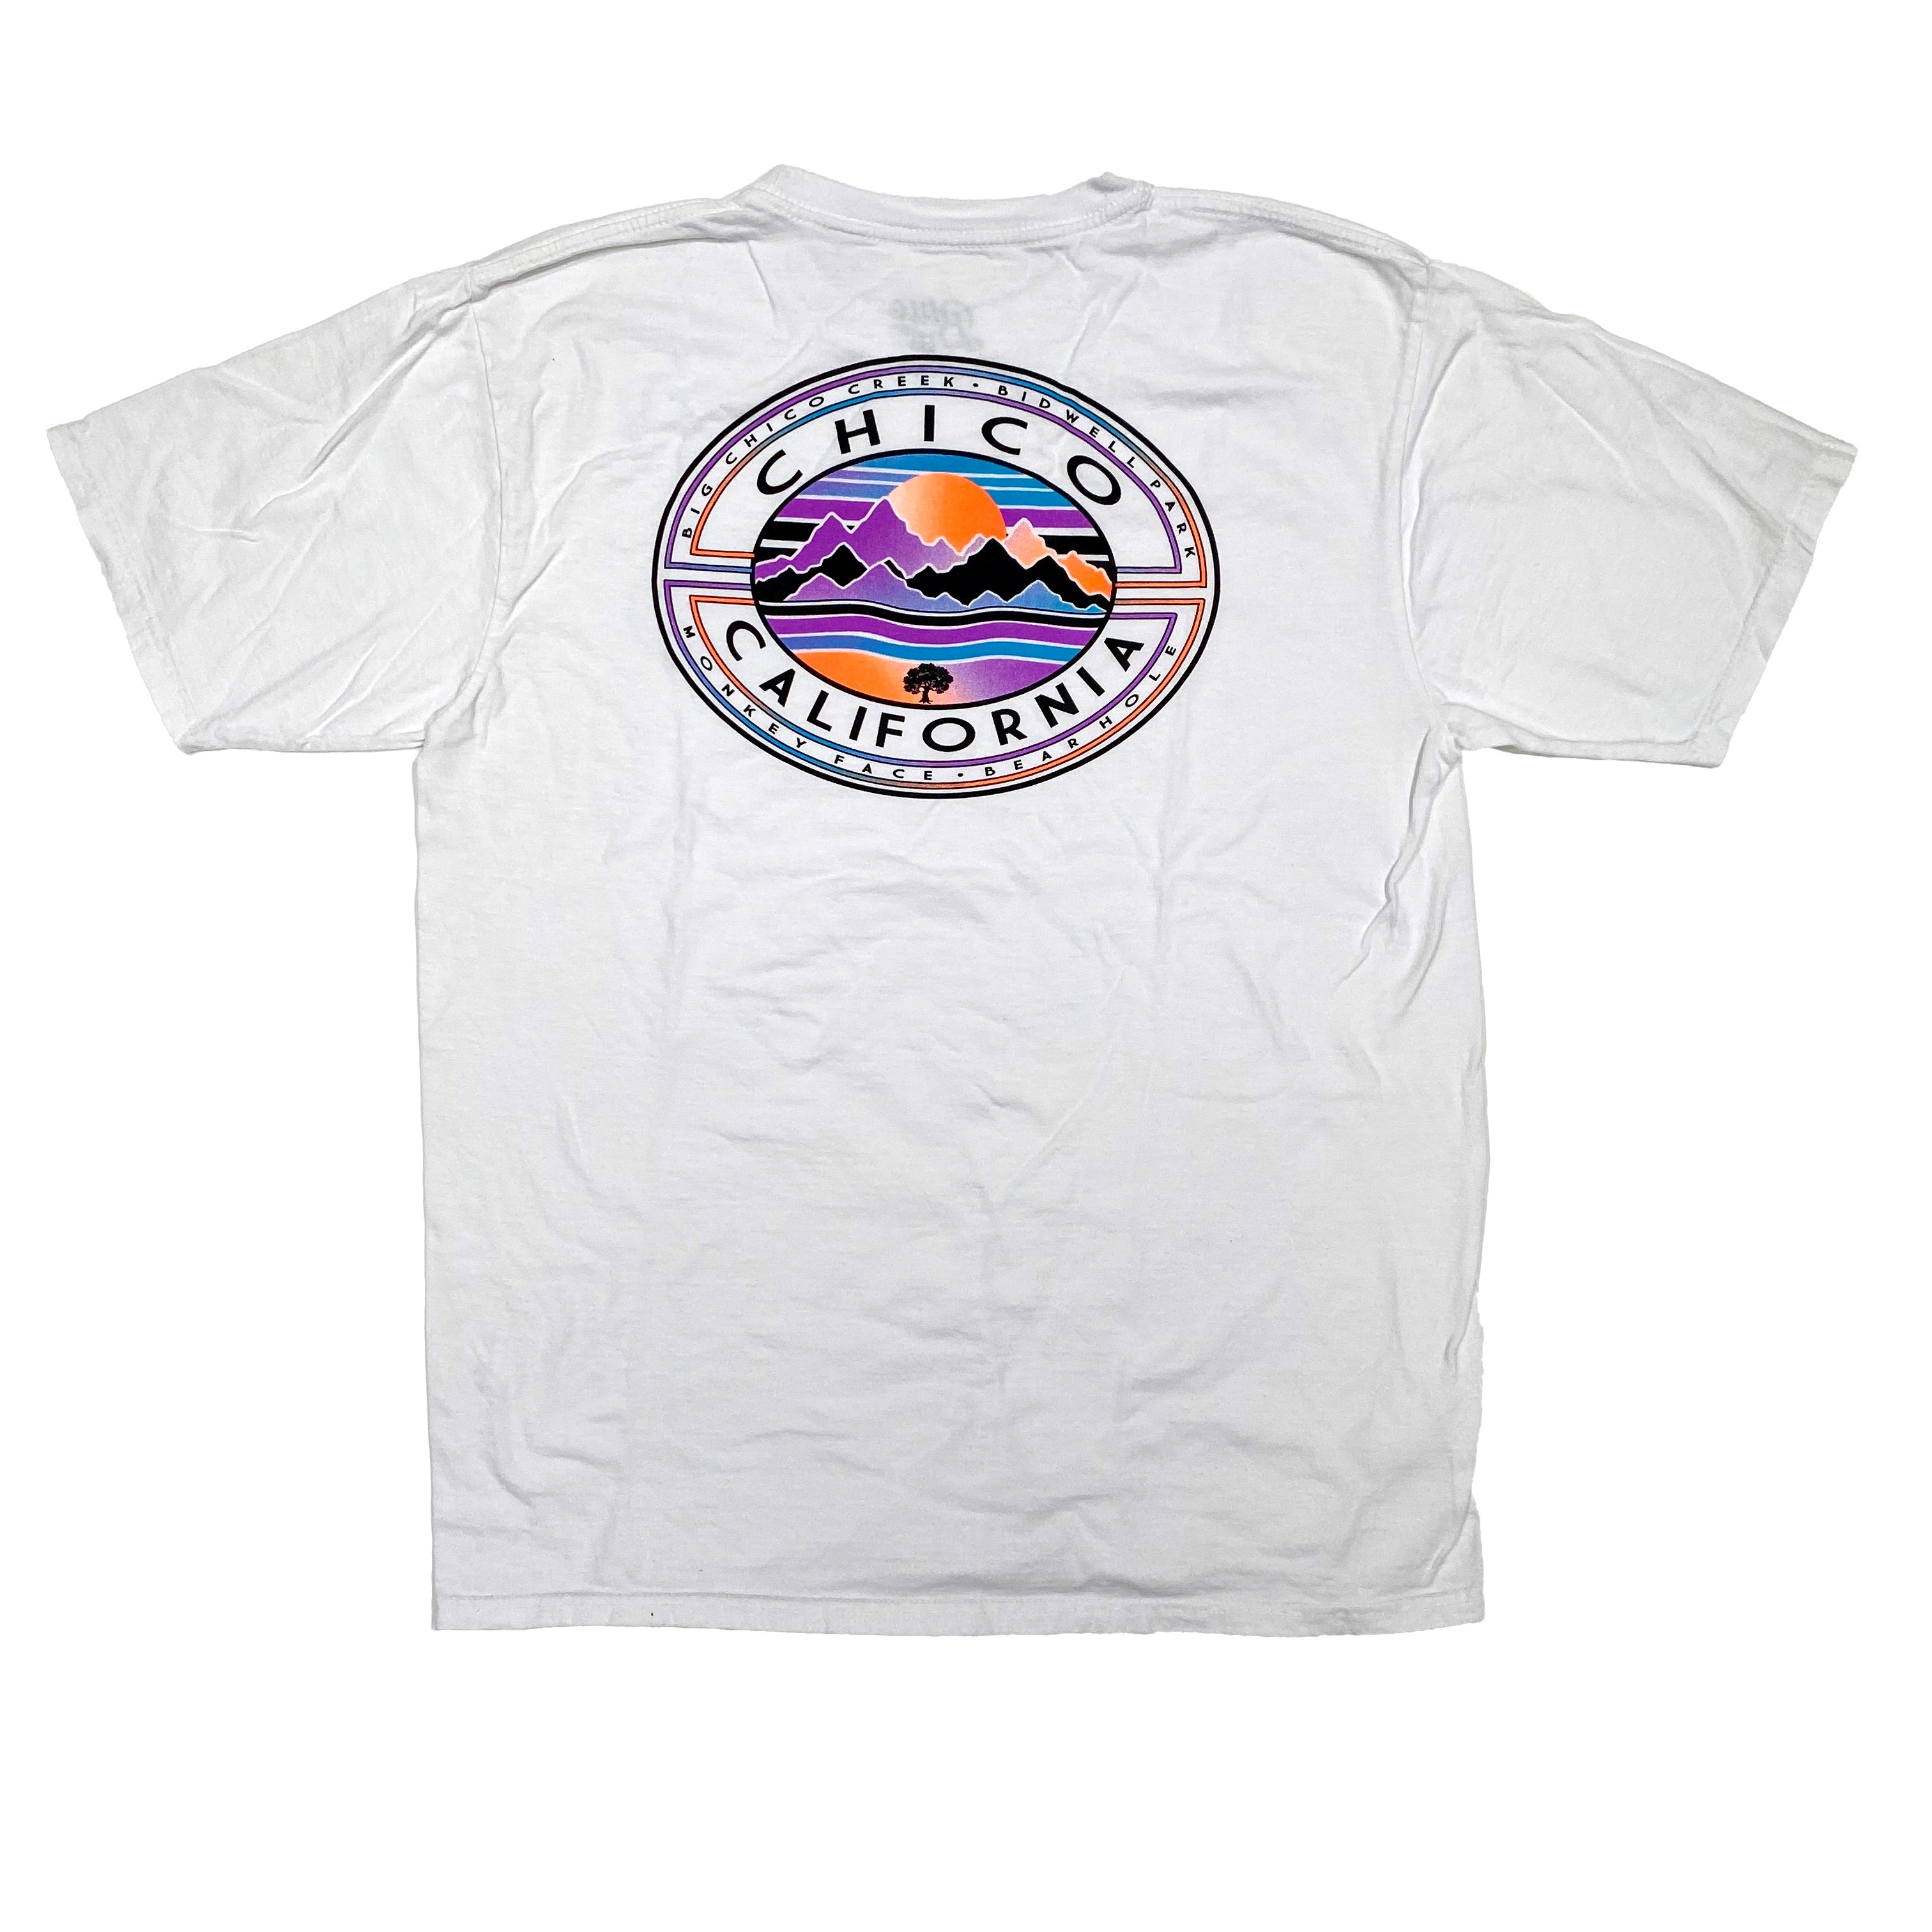 Recountable Chico Oak - Short Sleeve T-Shirt White S  3269968.6